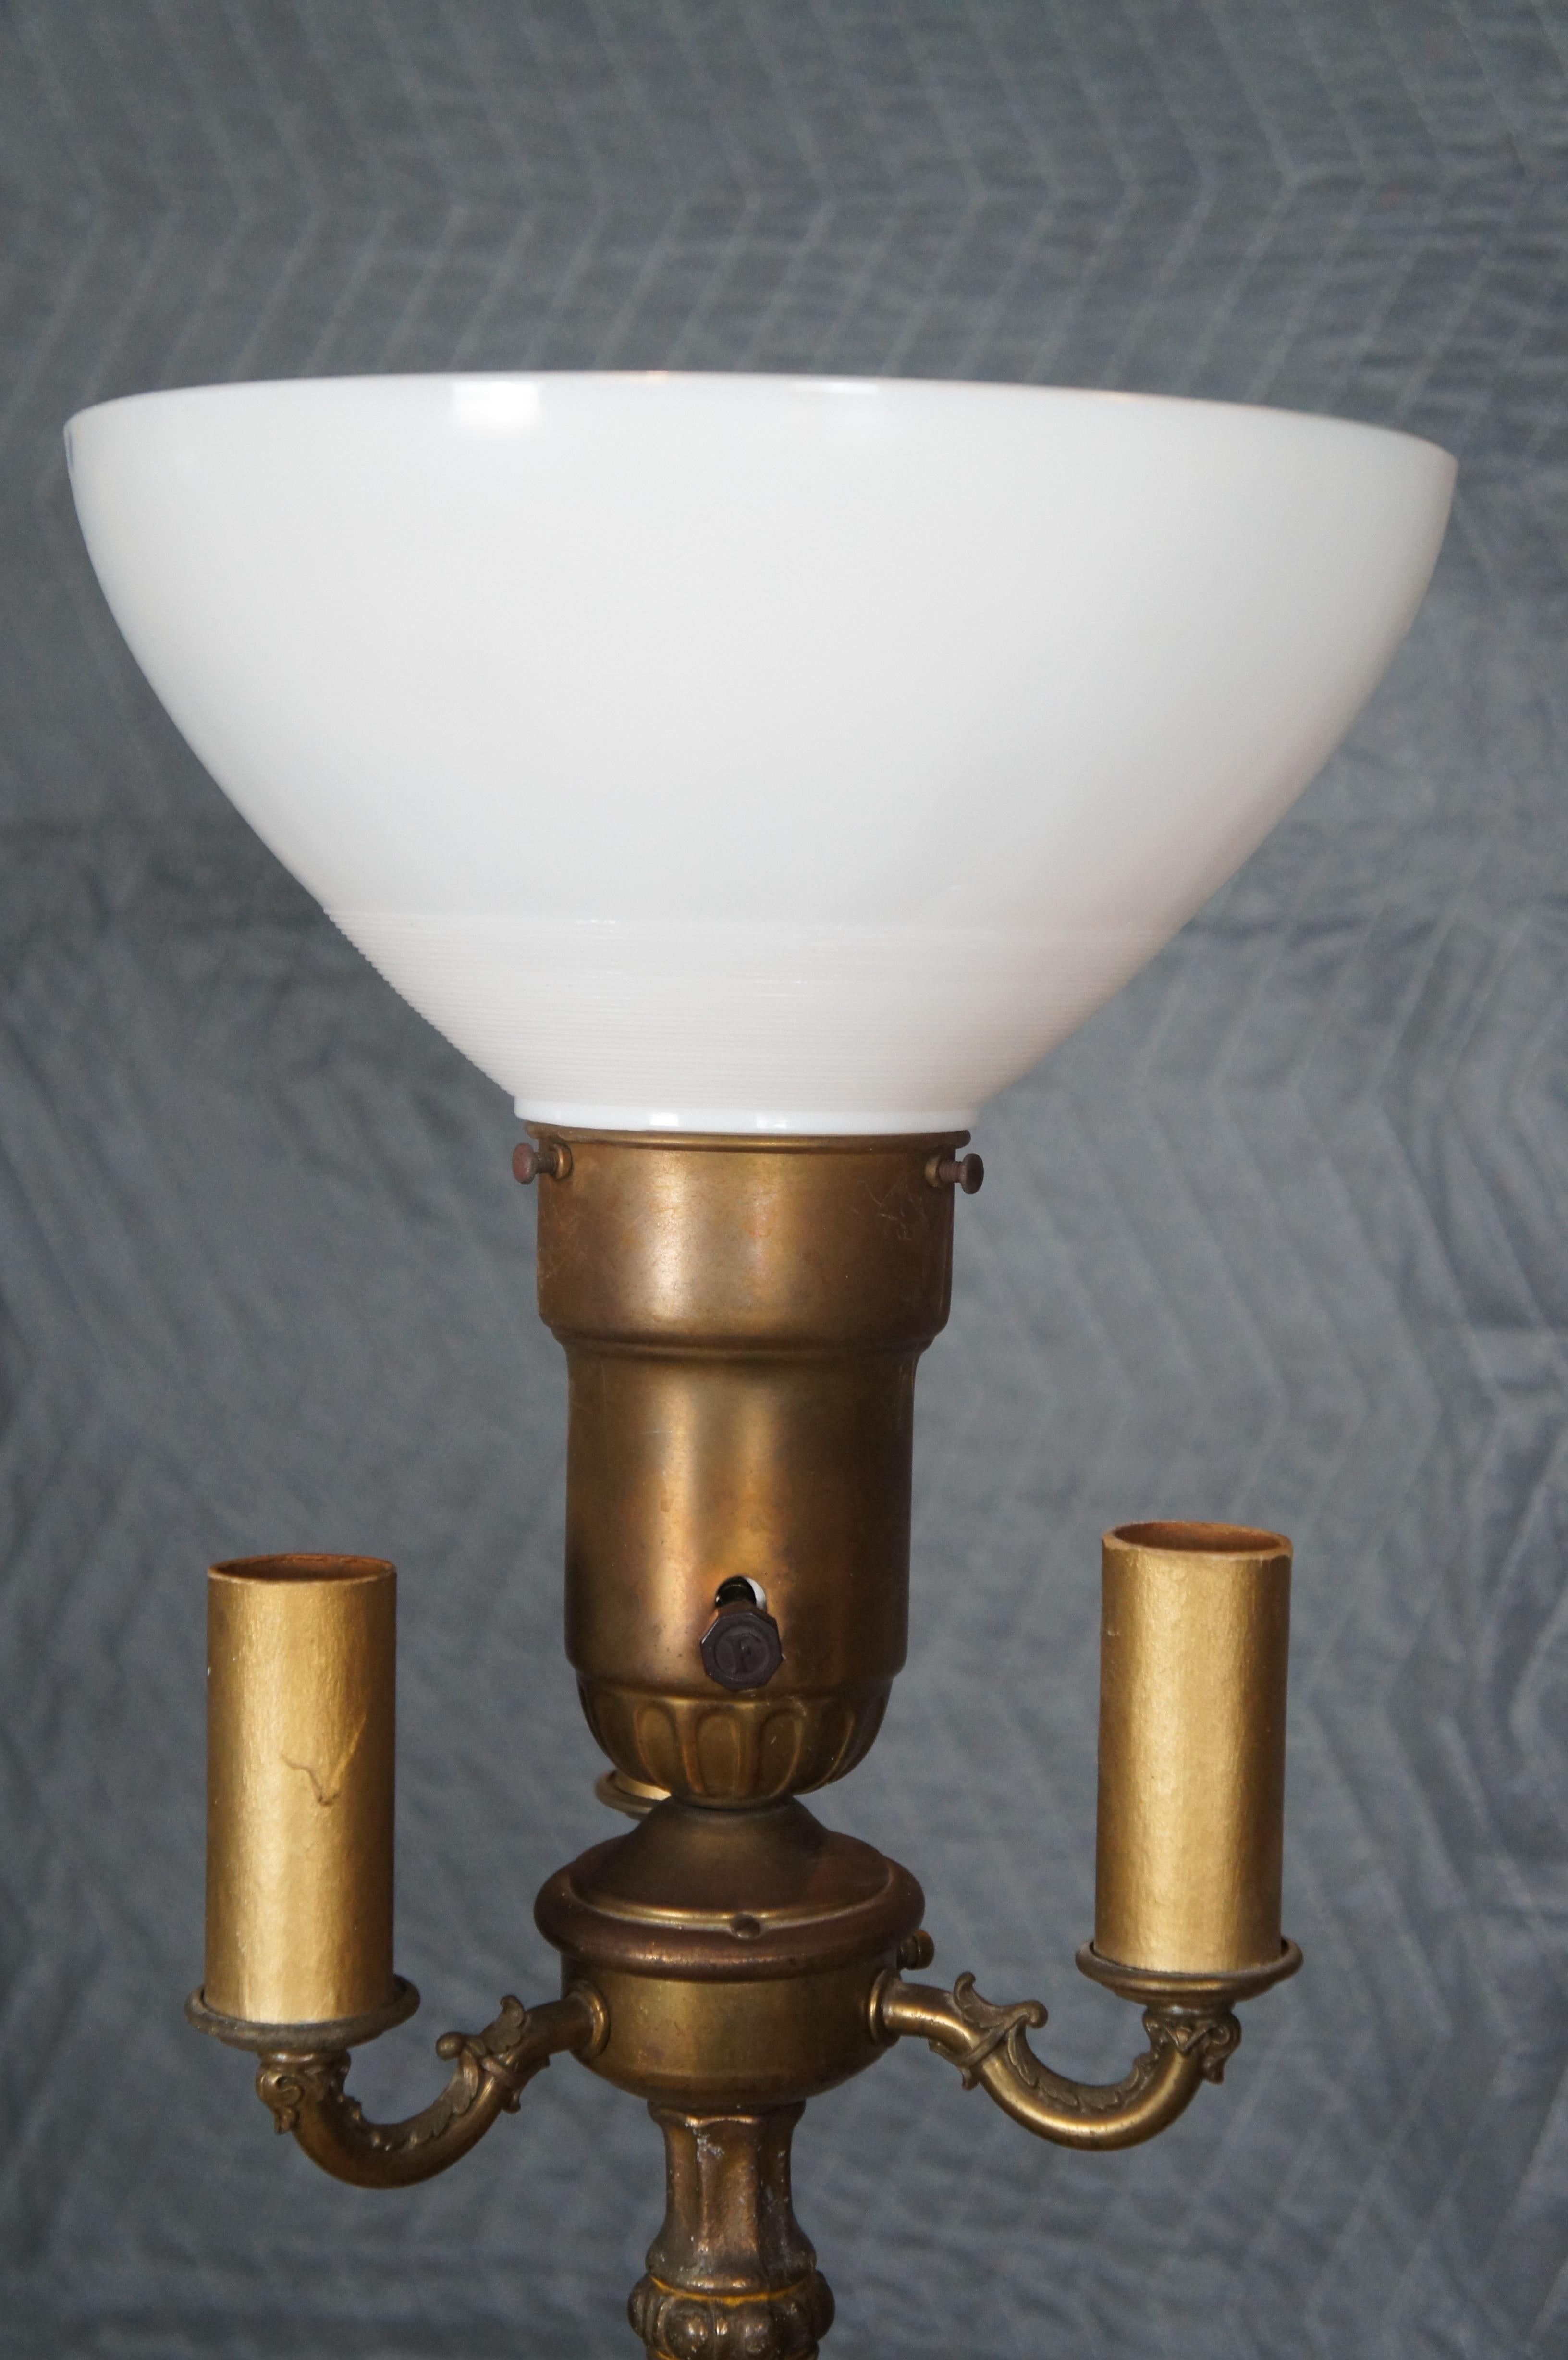 Victorian Antique Brass & Marble 3 Arm Candelabra Torchiere Floor Lamp w Shade 69